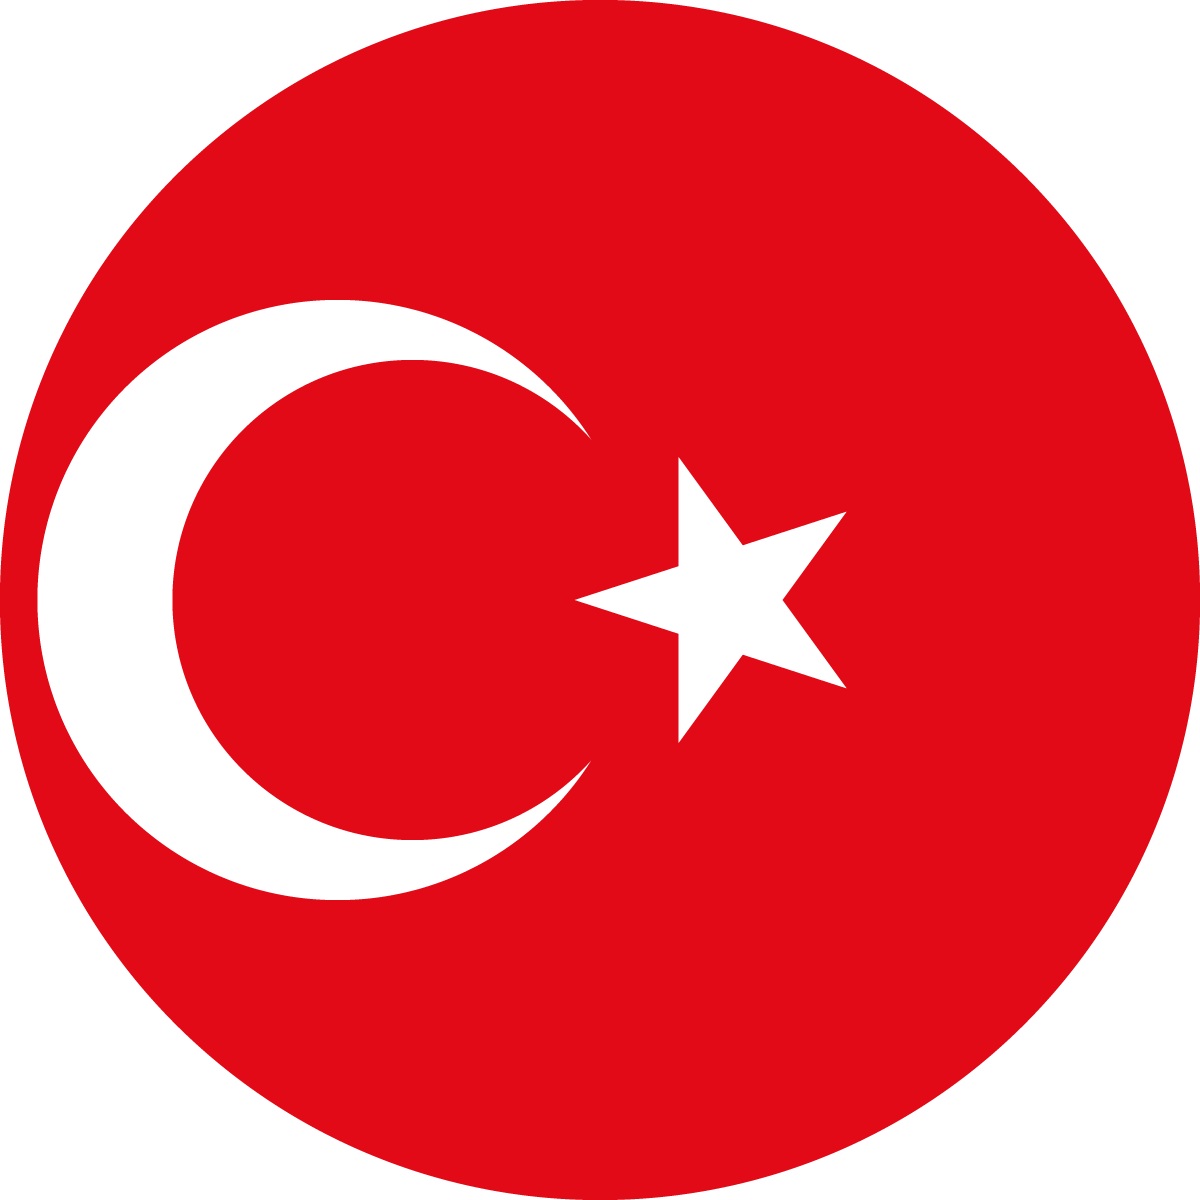 Copy of Copy of Copy of Copy of Copy of Copy of Turkey